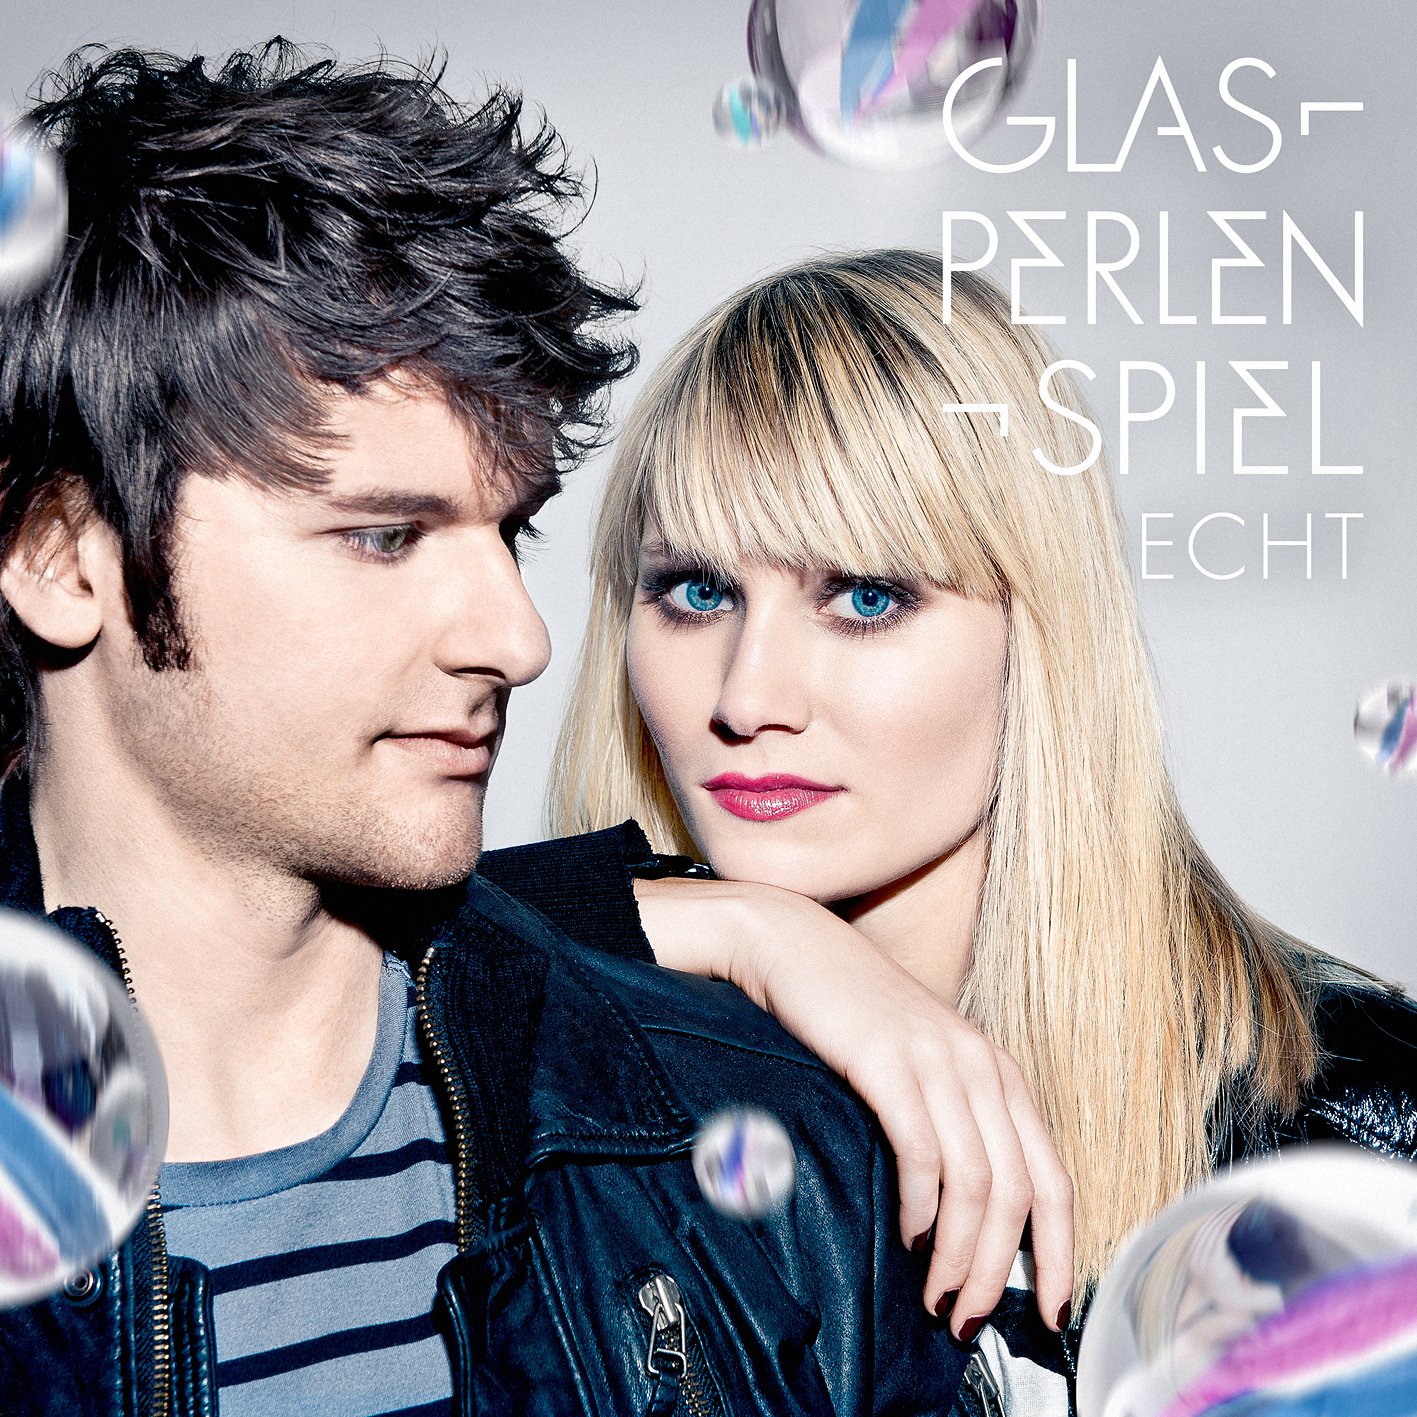 Glasperlenspiel — Echt cover artwork